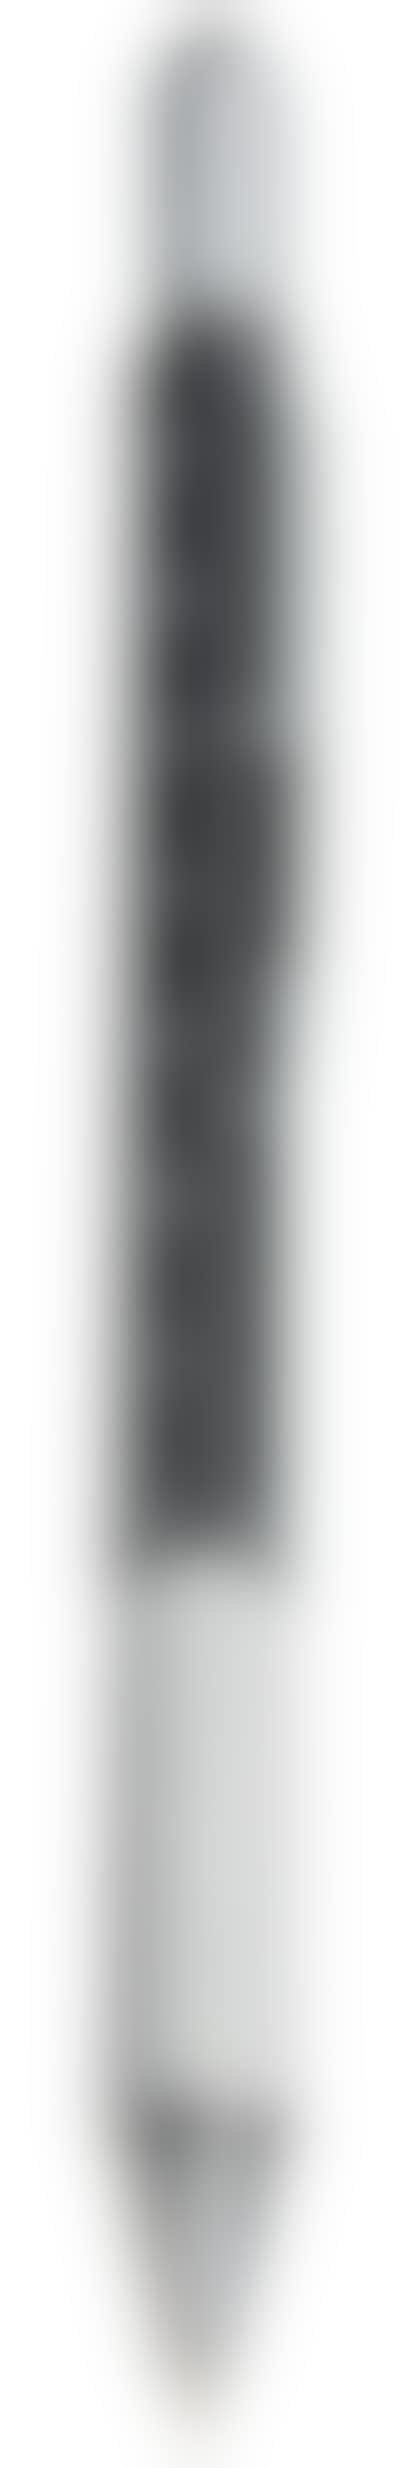 Multitool Ruler Pen